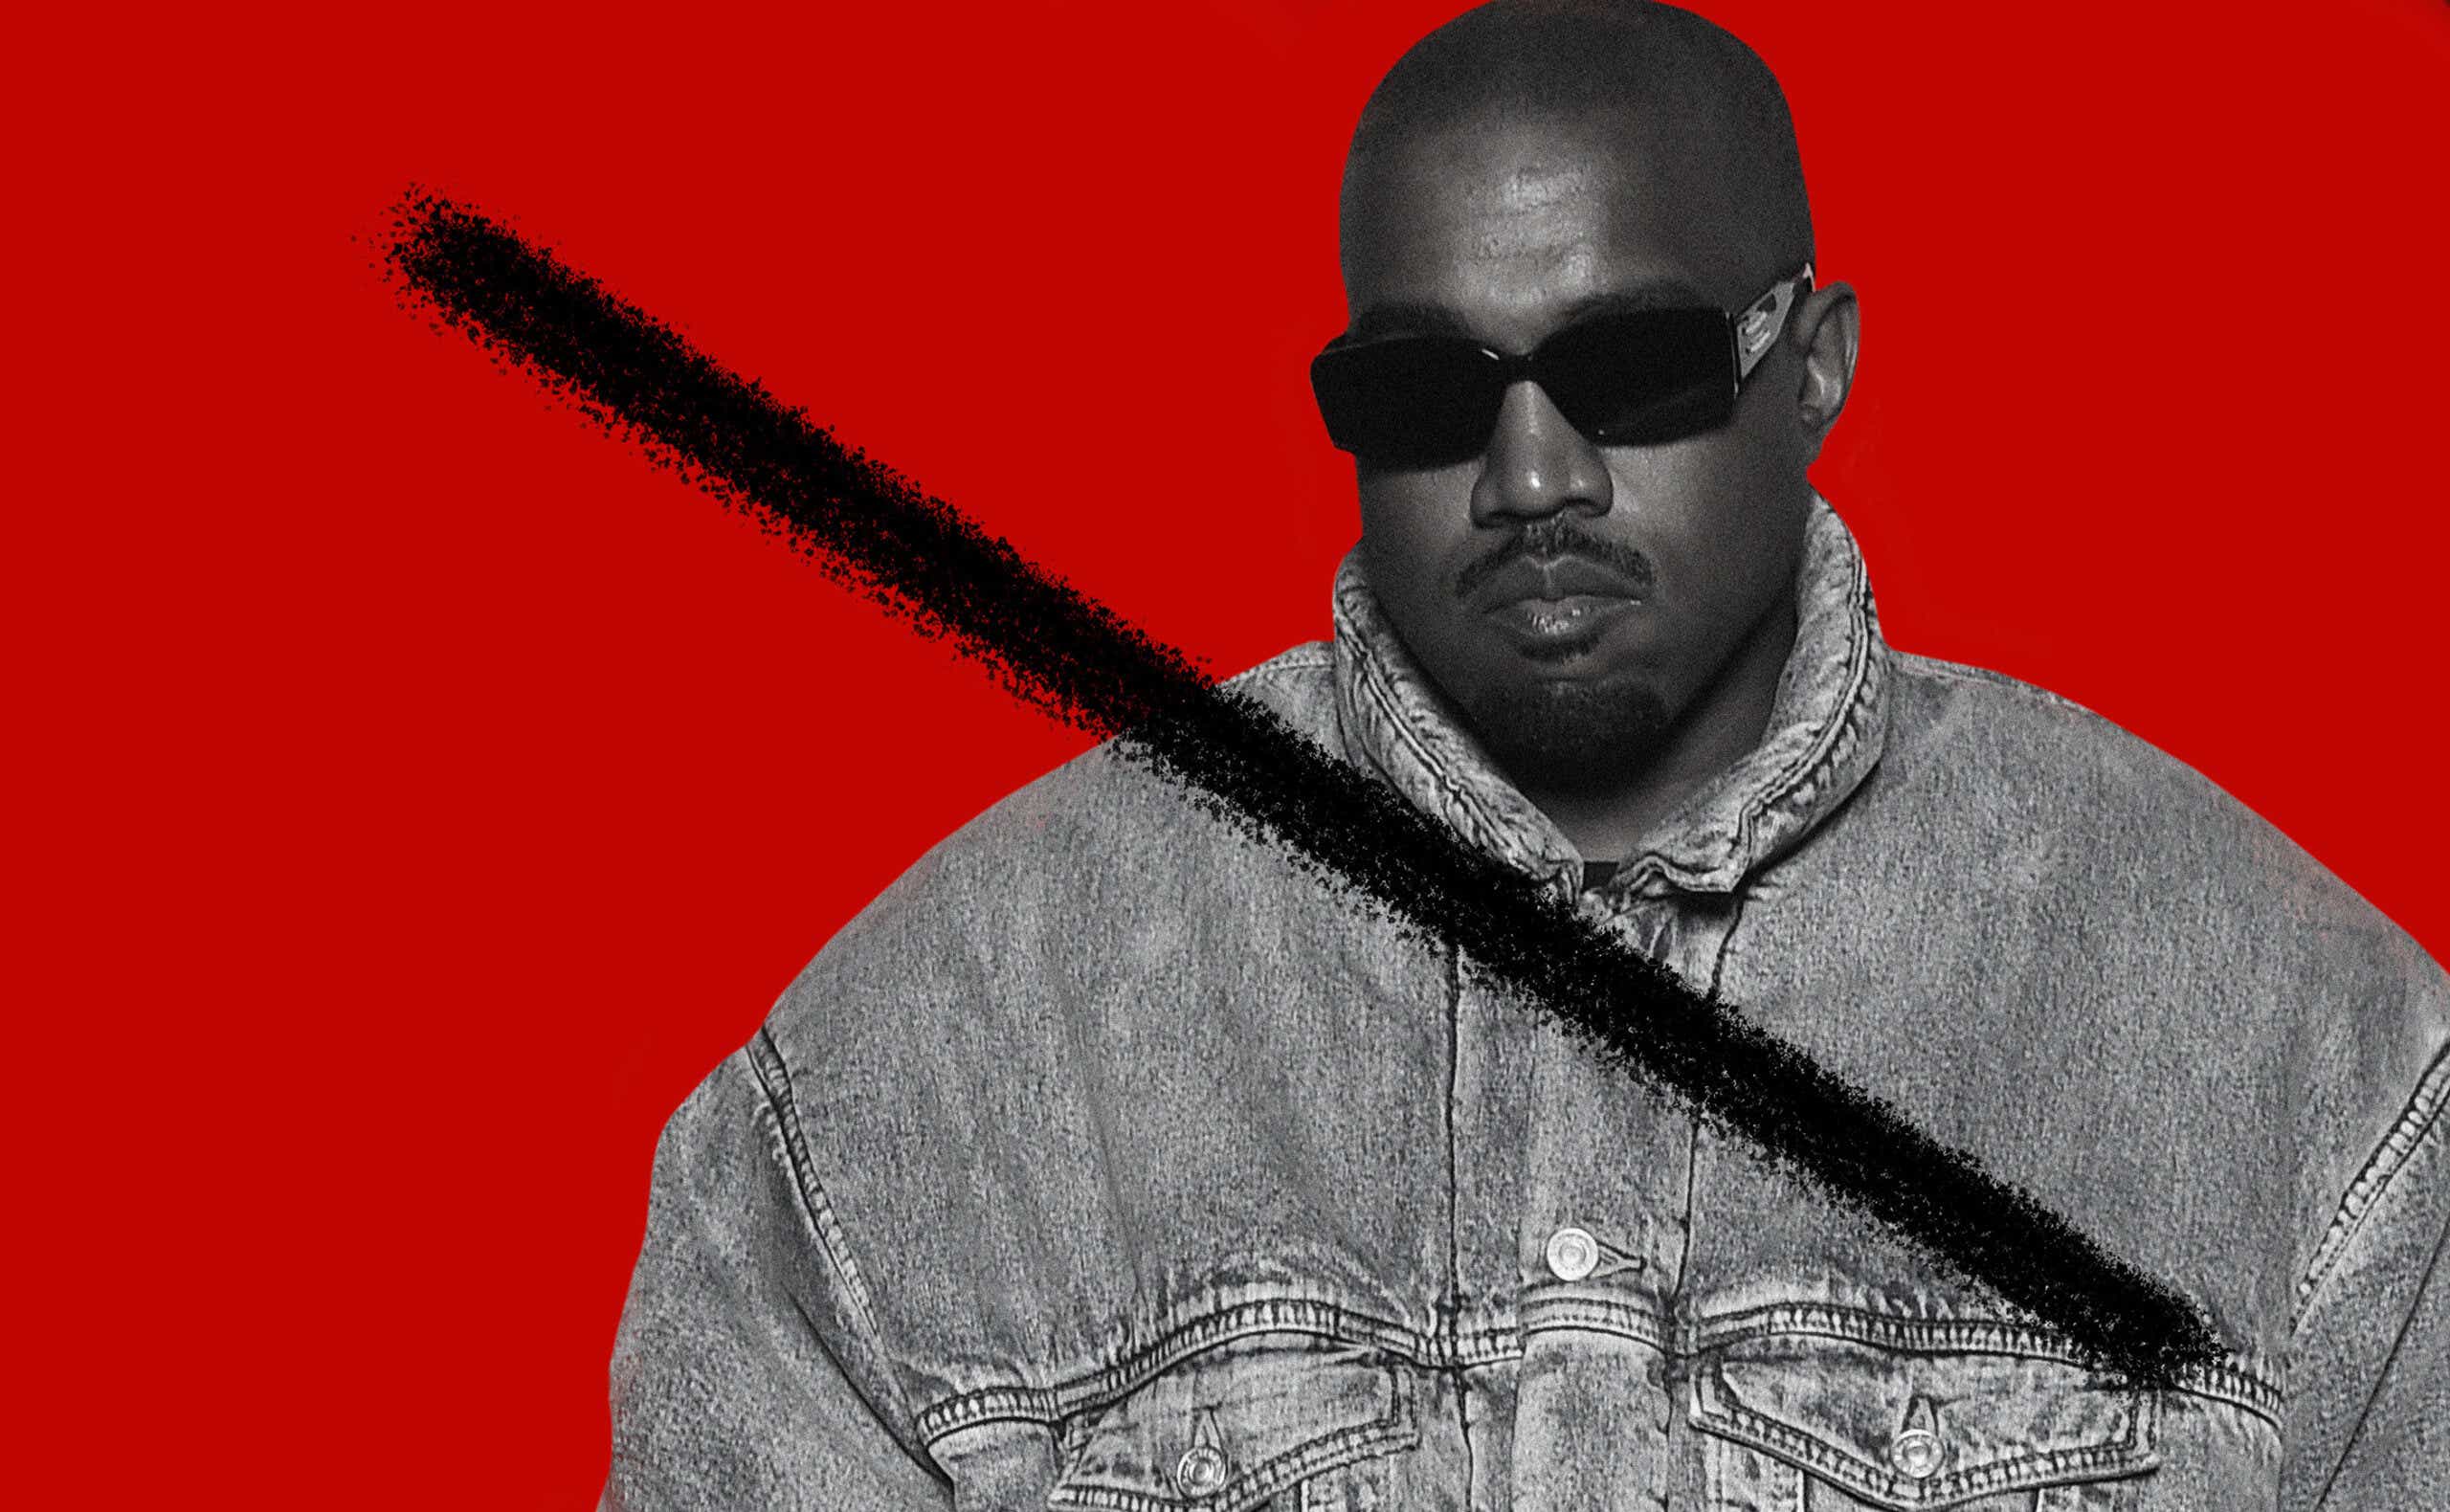 Kanye West on red background with black slash